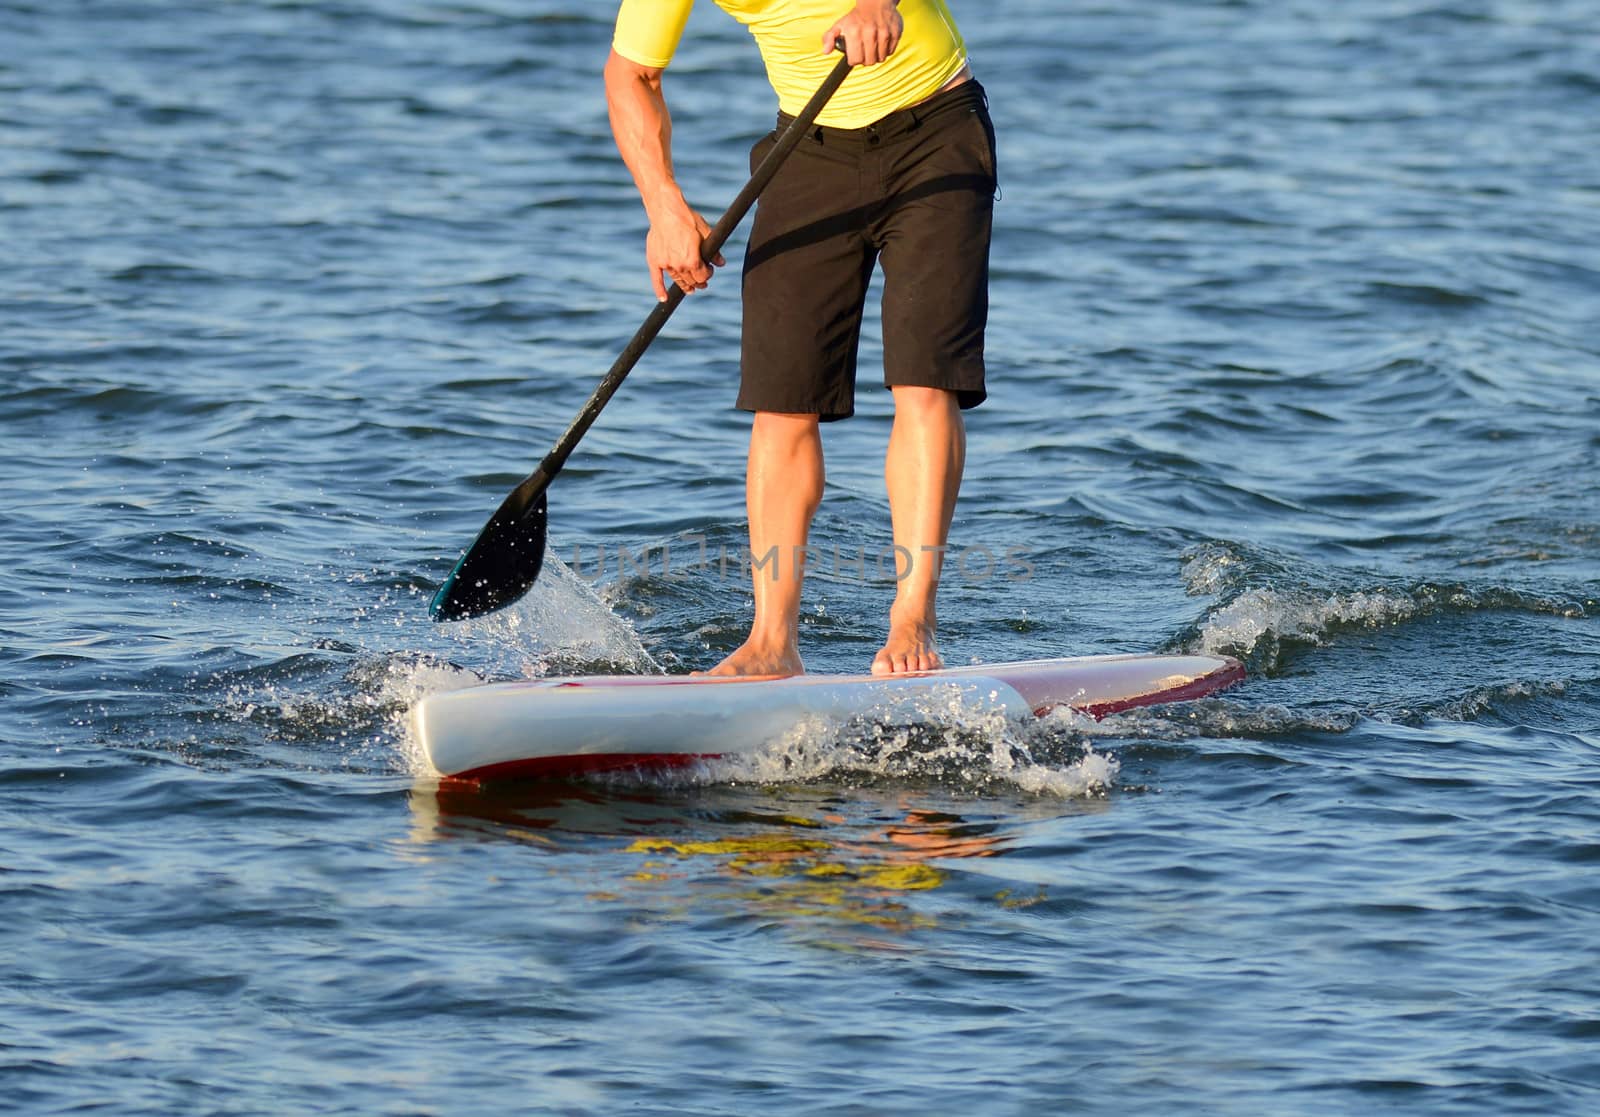 man on a paddle board in ocean by ftlaudgirl